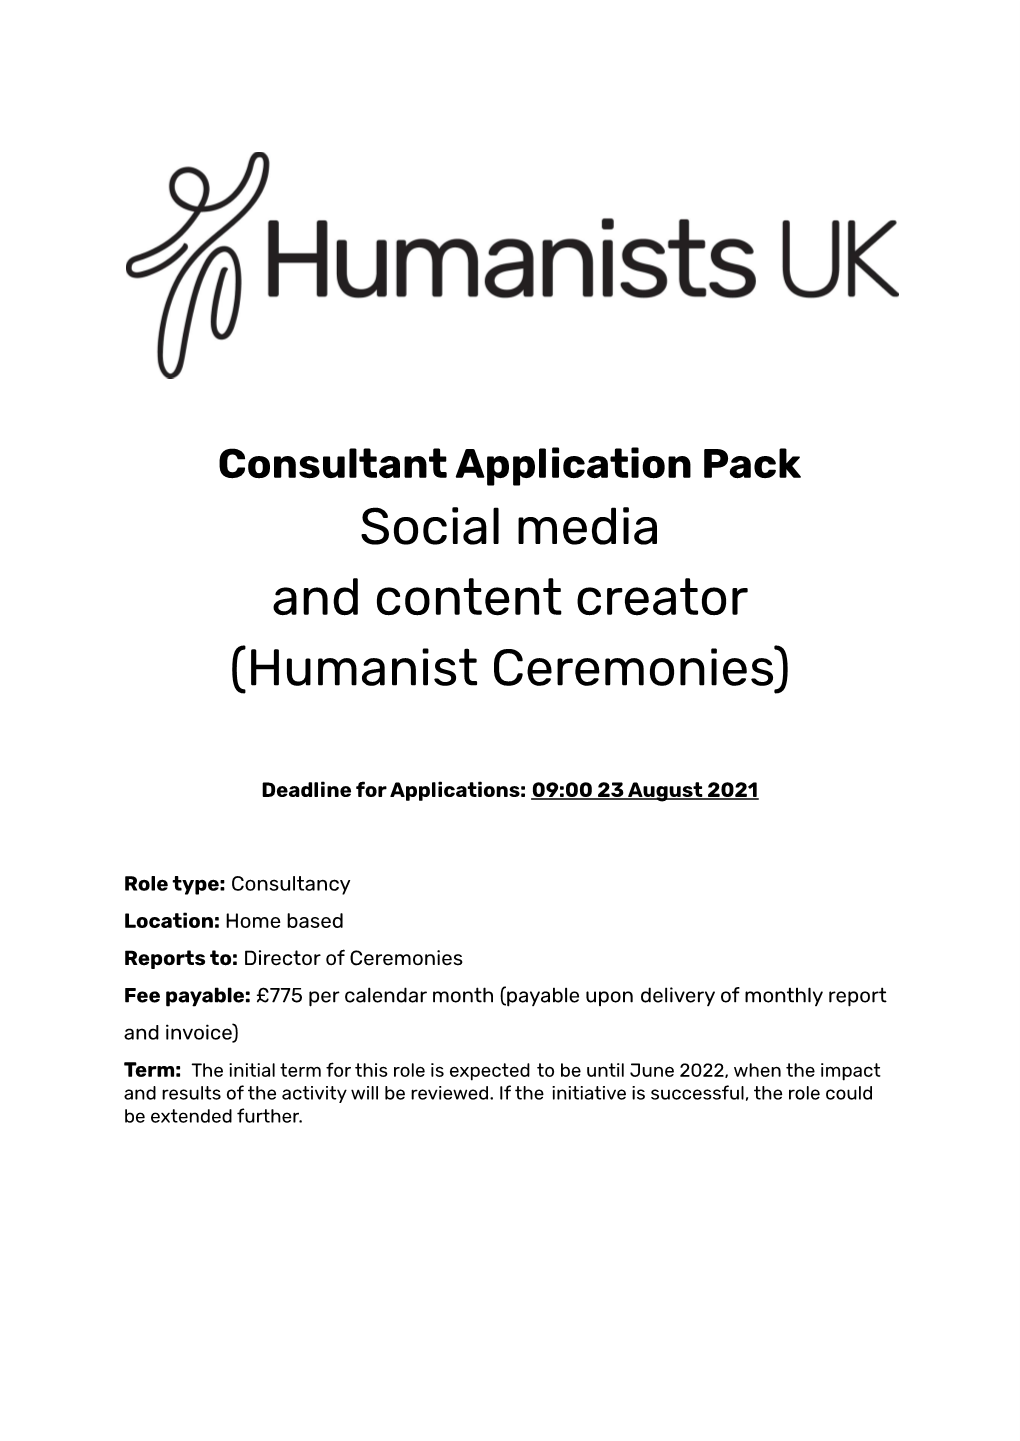 Social Media and Content Creator (Humanist Ceremonies)